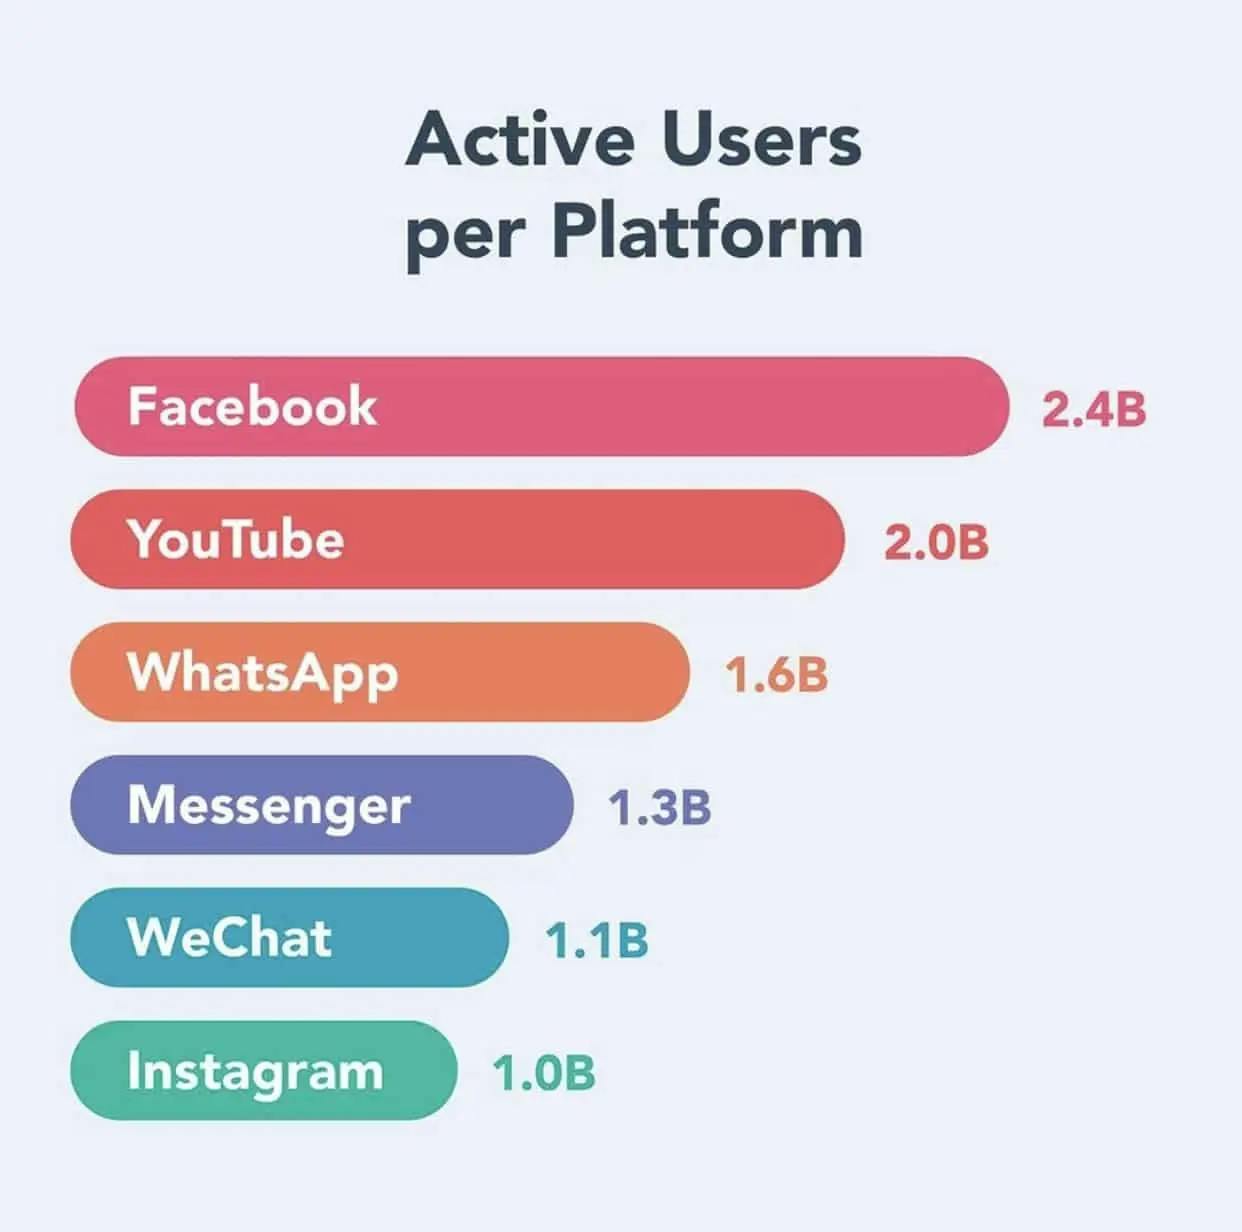 Active users per platform